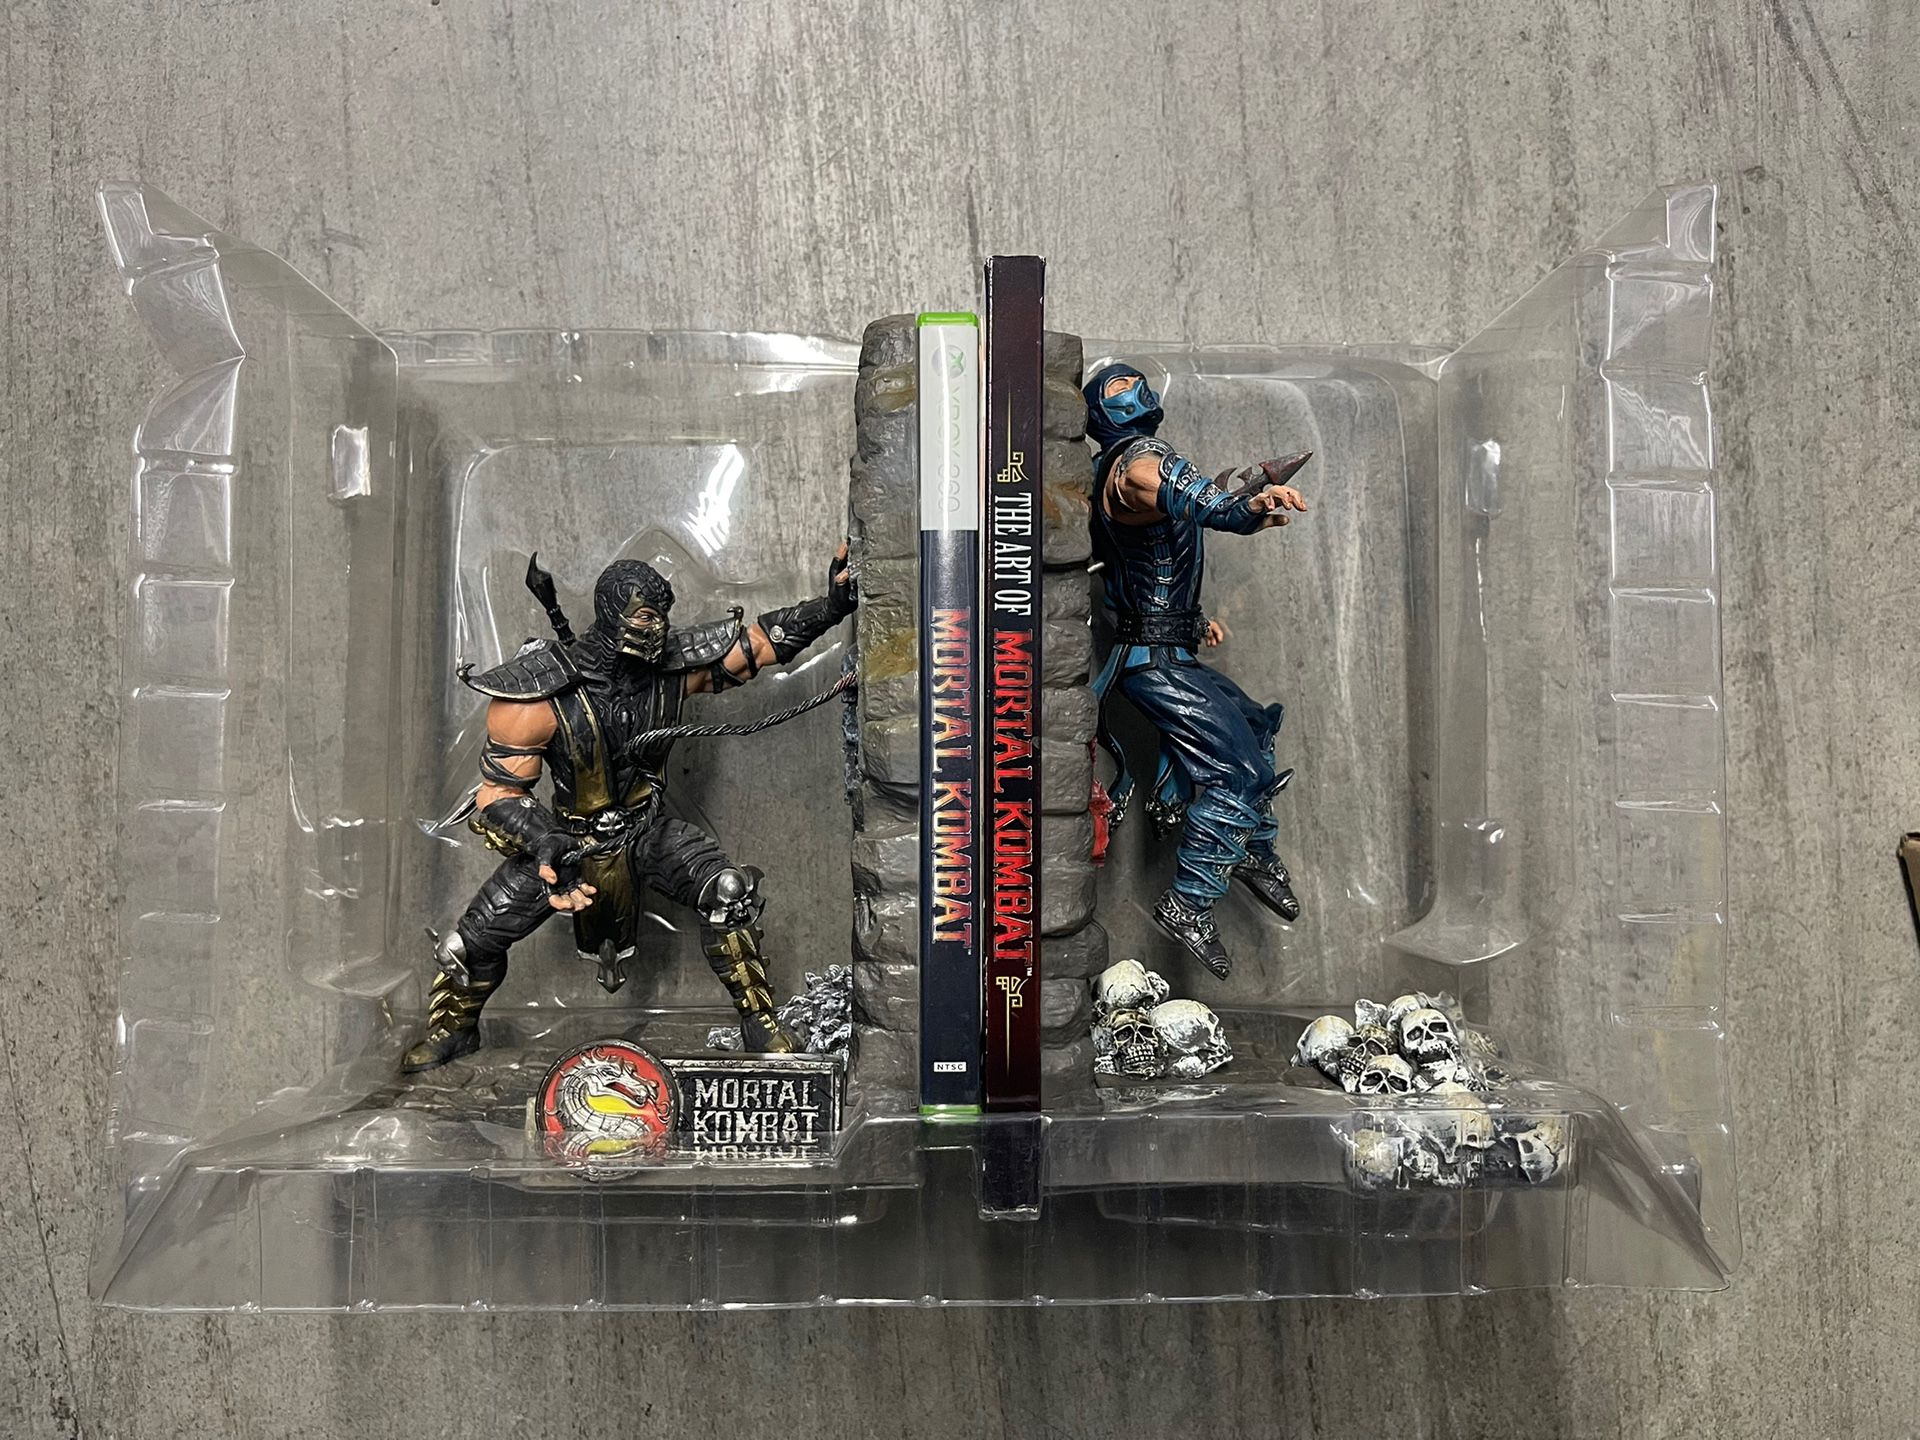 Mortal Kombat 9 Kollector's Edition XBOX360 with Scorpion & Sub-Zero bookends